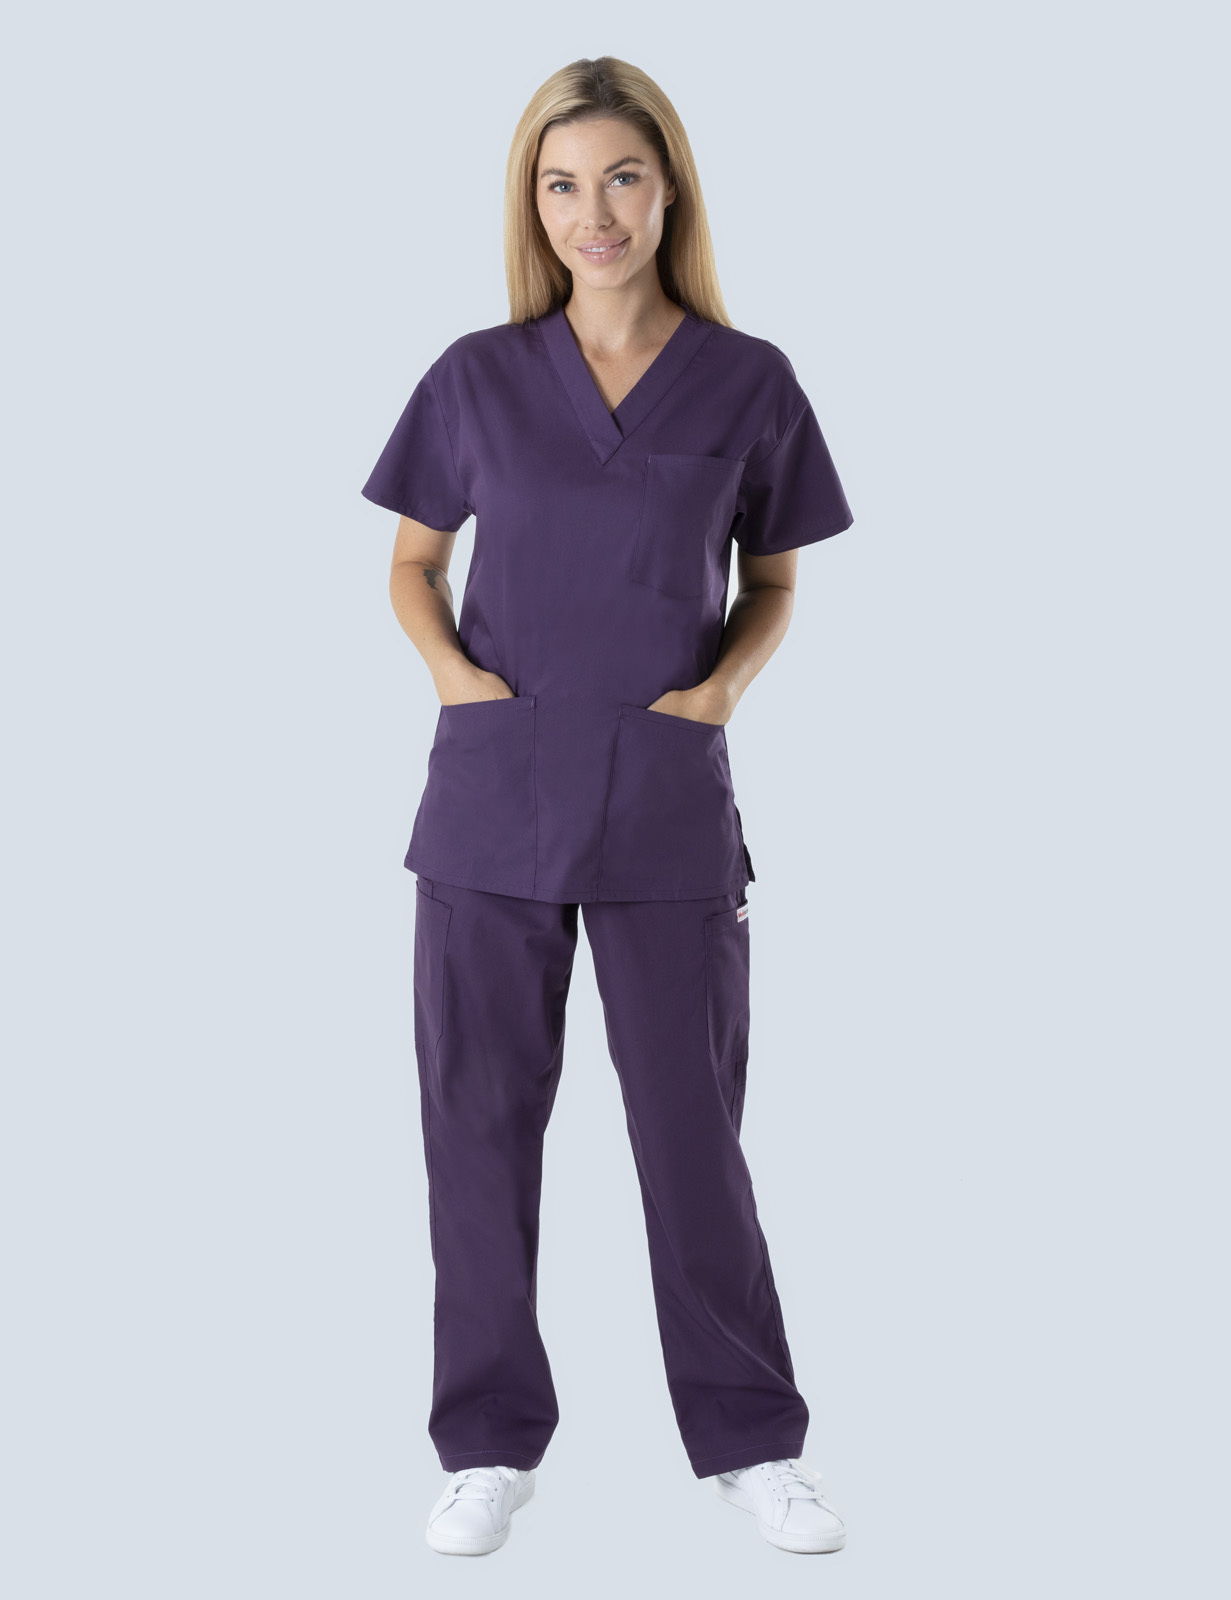 Logan Hospital Birthing Suite Uniform Set Bundle (4 Pocket Top and Cargo Pants in Aubergine incl Logo)